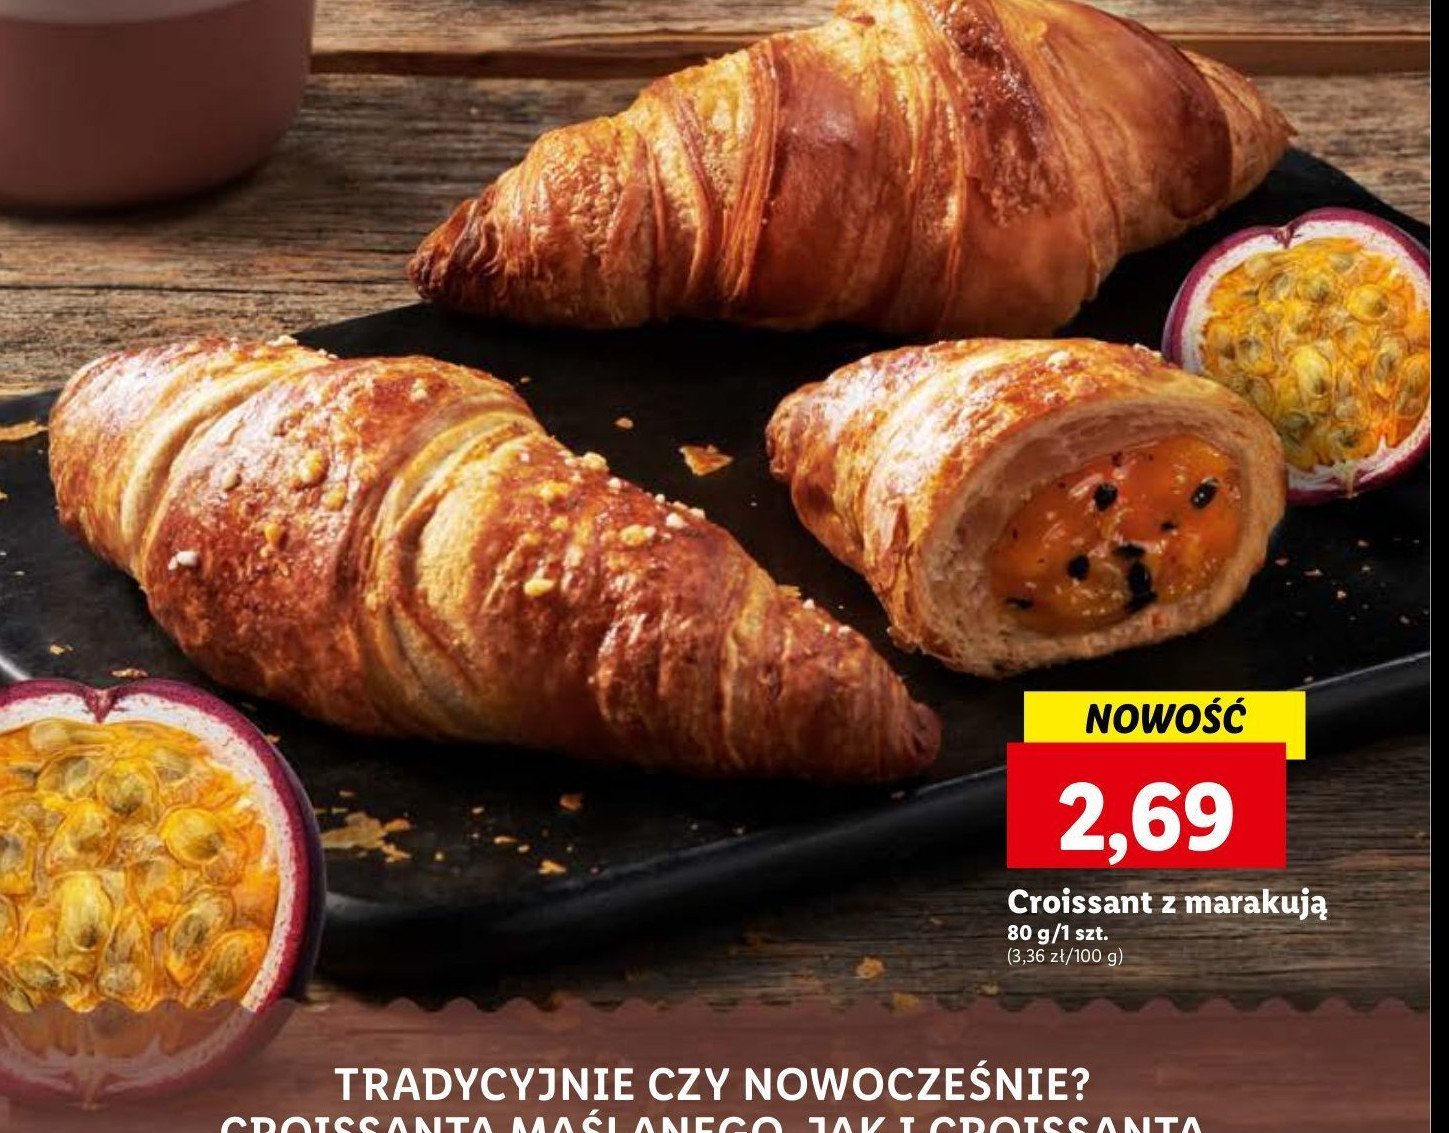 Croissant z marakują promocja